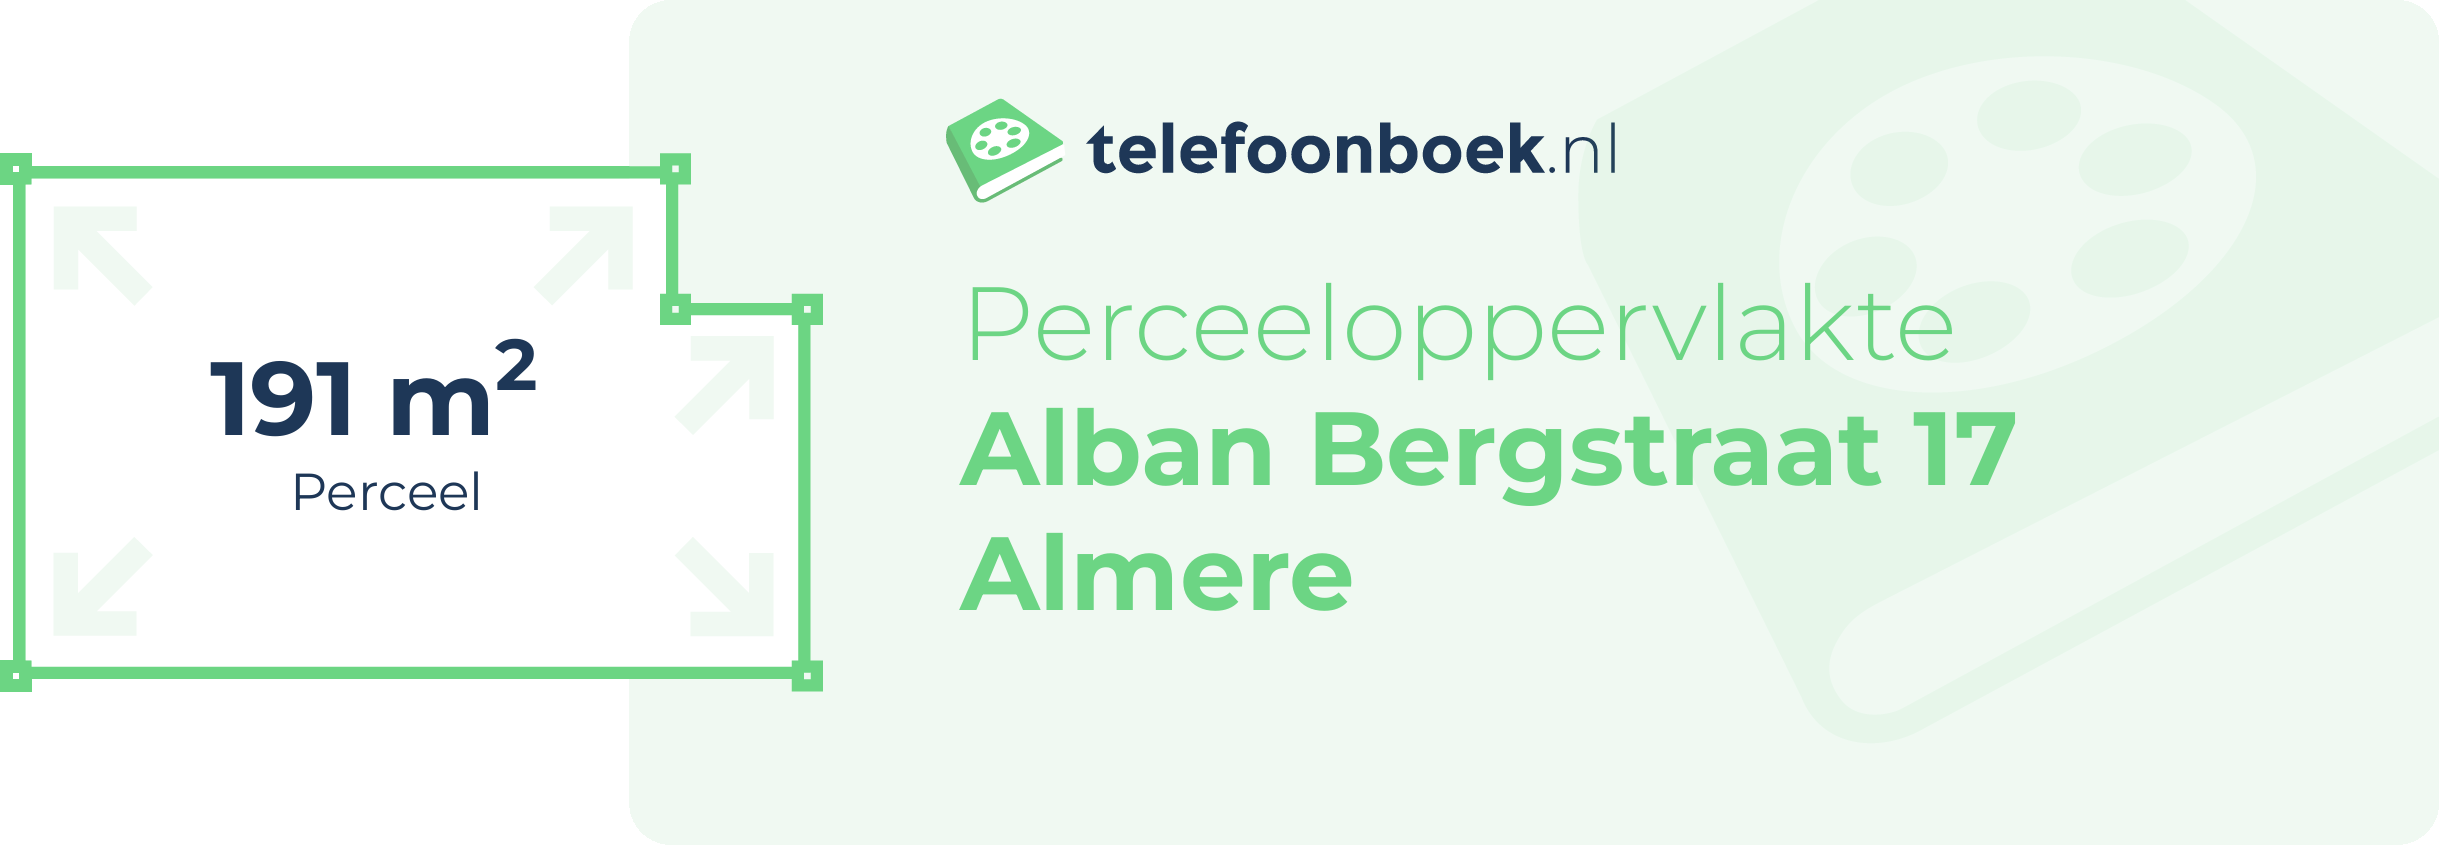 Perceeloppervlakte Alban Bergstraat 17 Almere